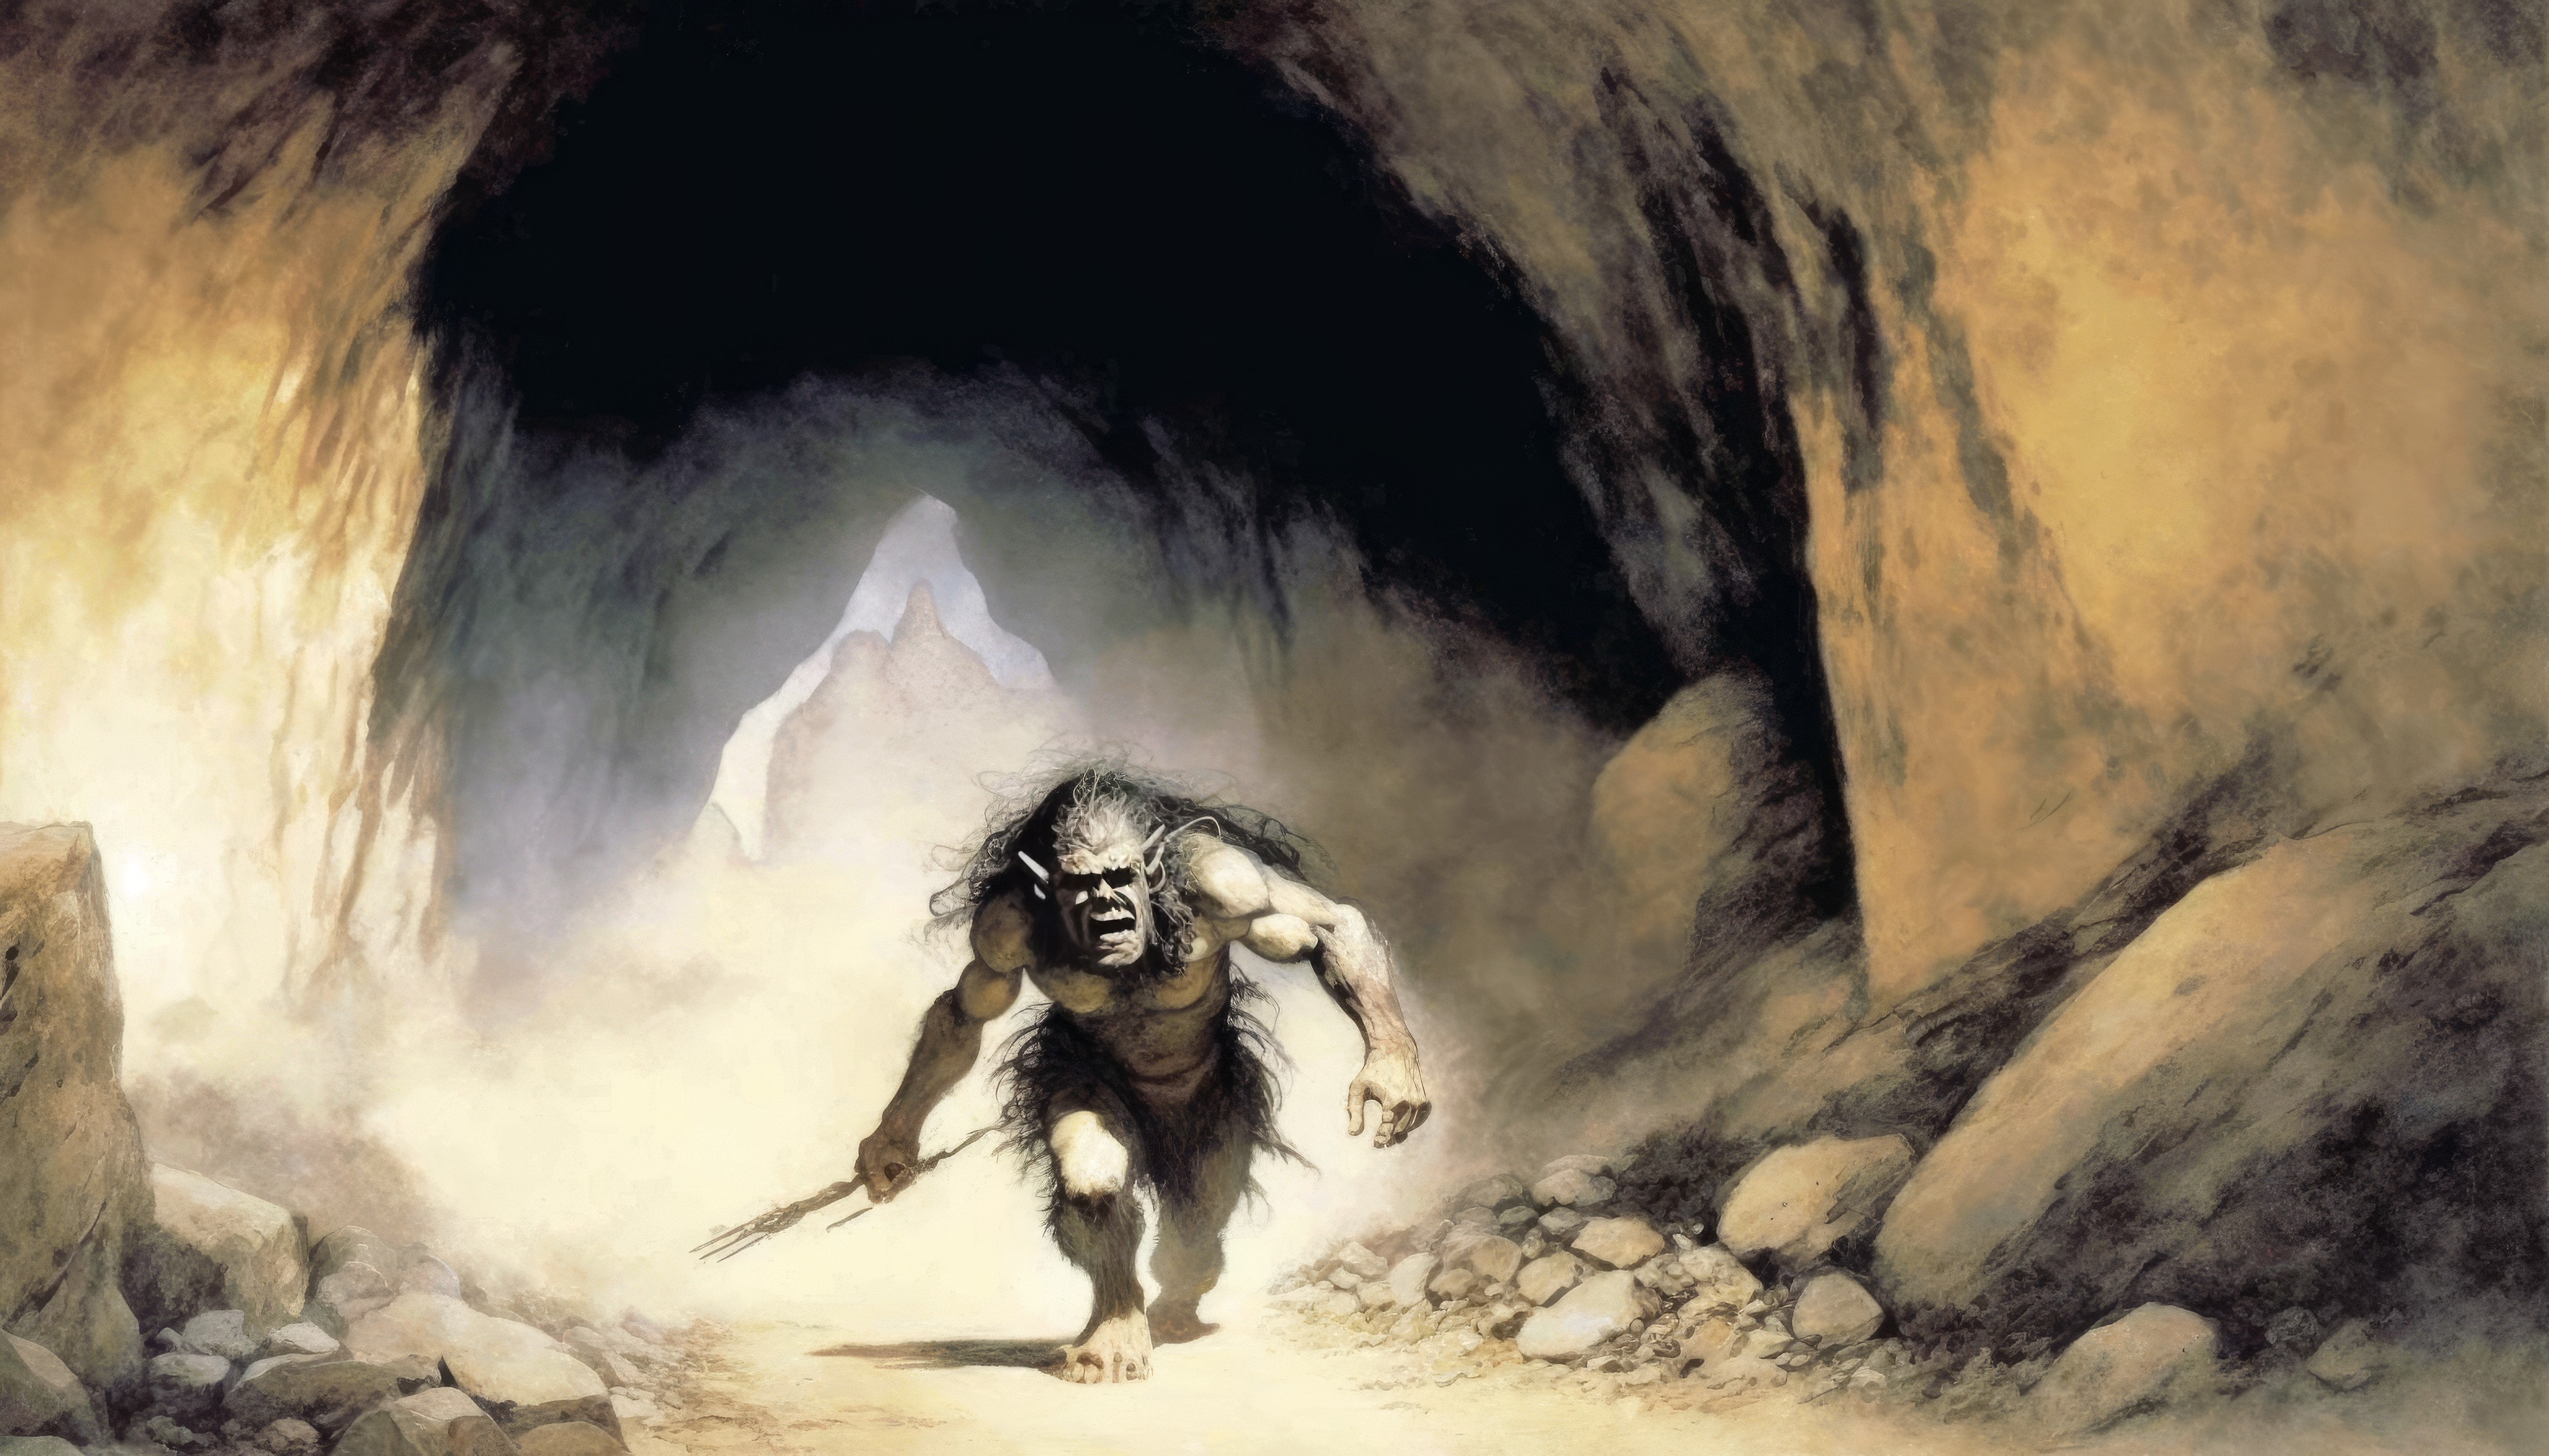 Ai Art Illustration Trolls Cave Painting Creature Rocks 4579x2616